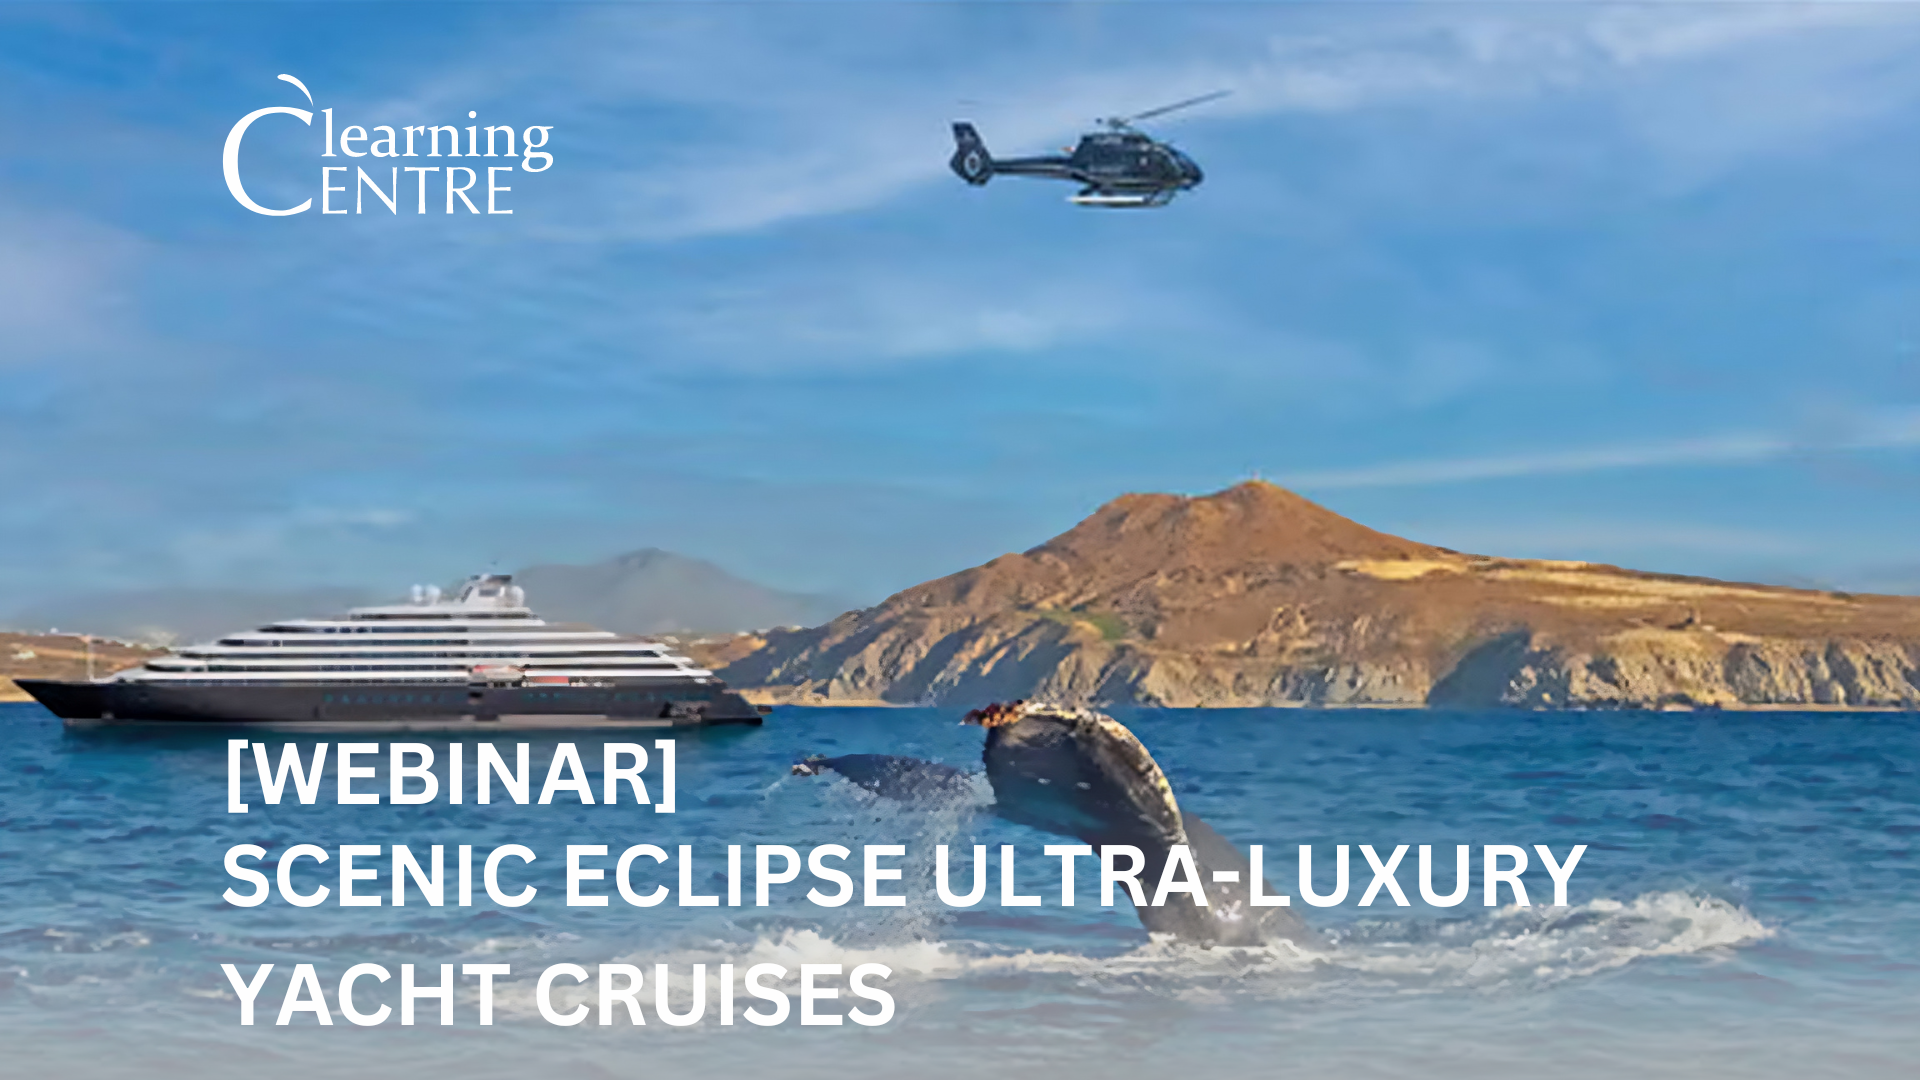 Scenic Eclipse Ultra-Luxury Yacht Cruises